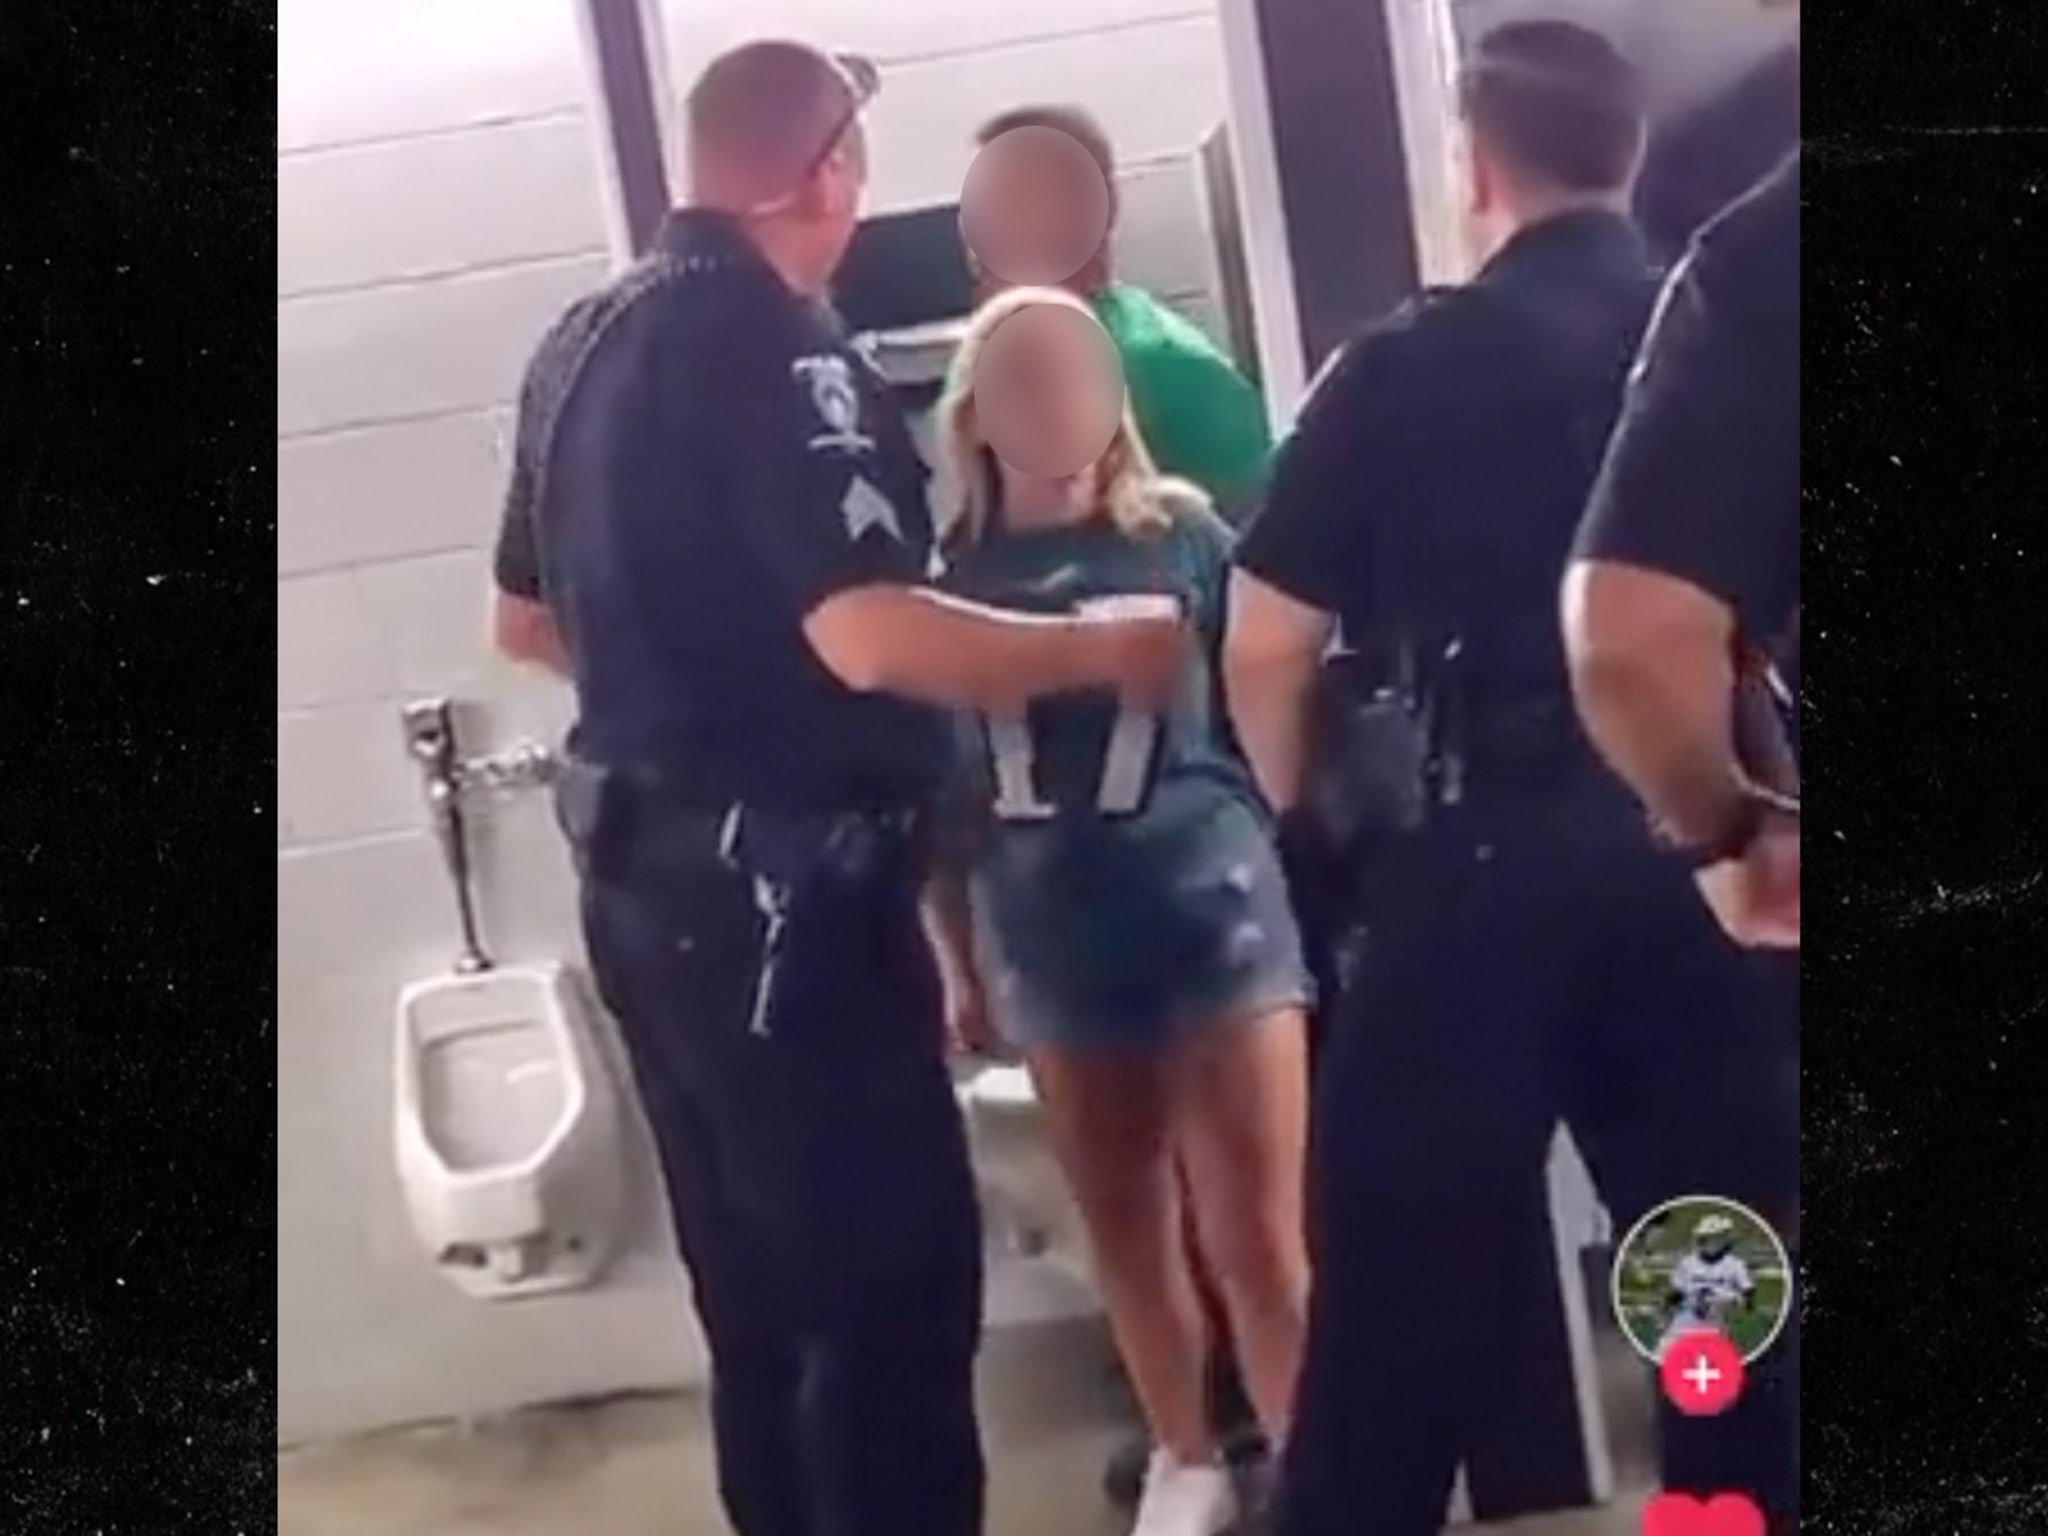 Eagles Fans Not Arrested For Alleged Bathroom Sex At NFL Stadium, Cops pic